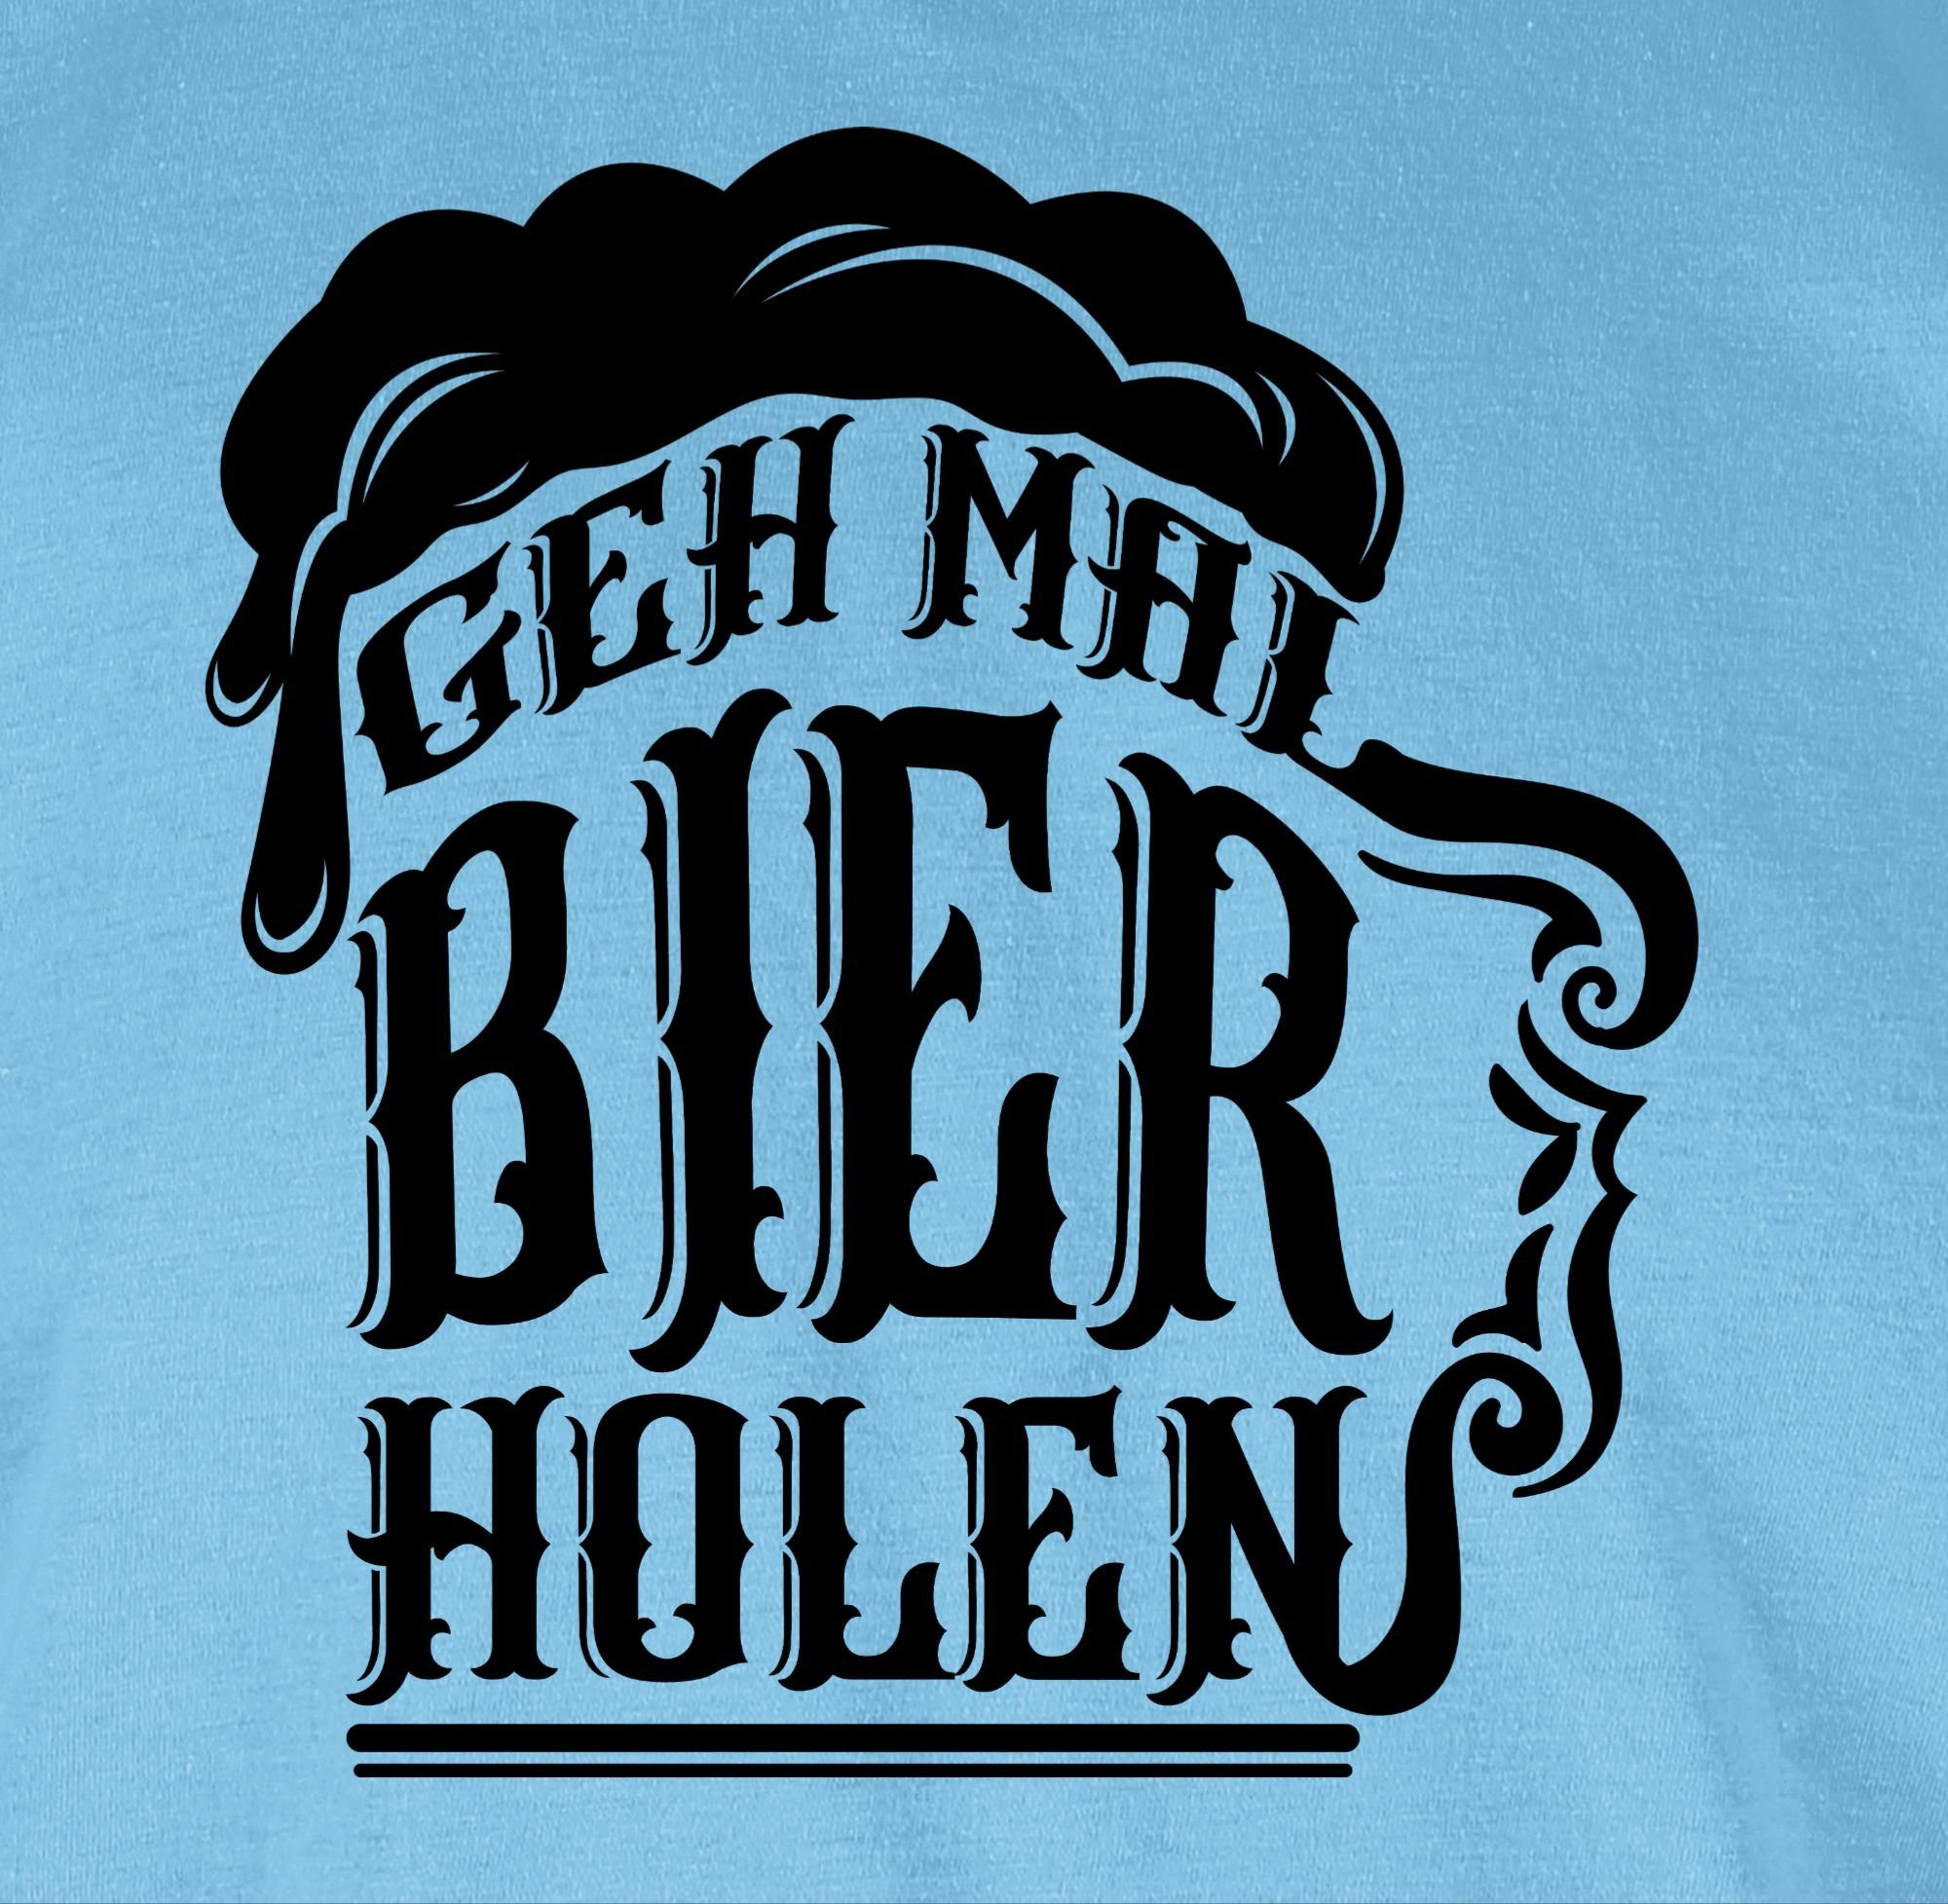 03 & Herren holen - schwarz Party Geh Bier Hellblau Alkohol Shirtracer mal T-Shirt